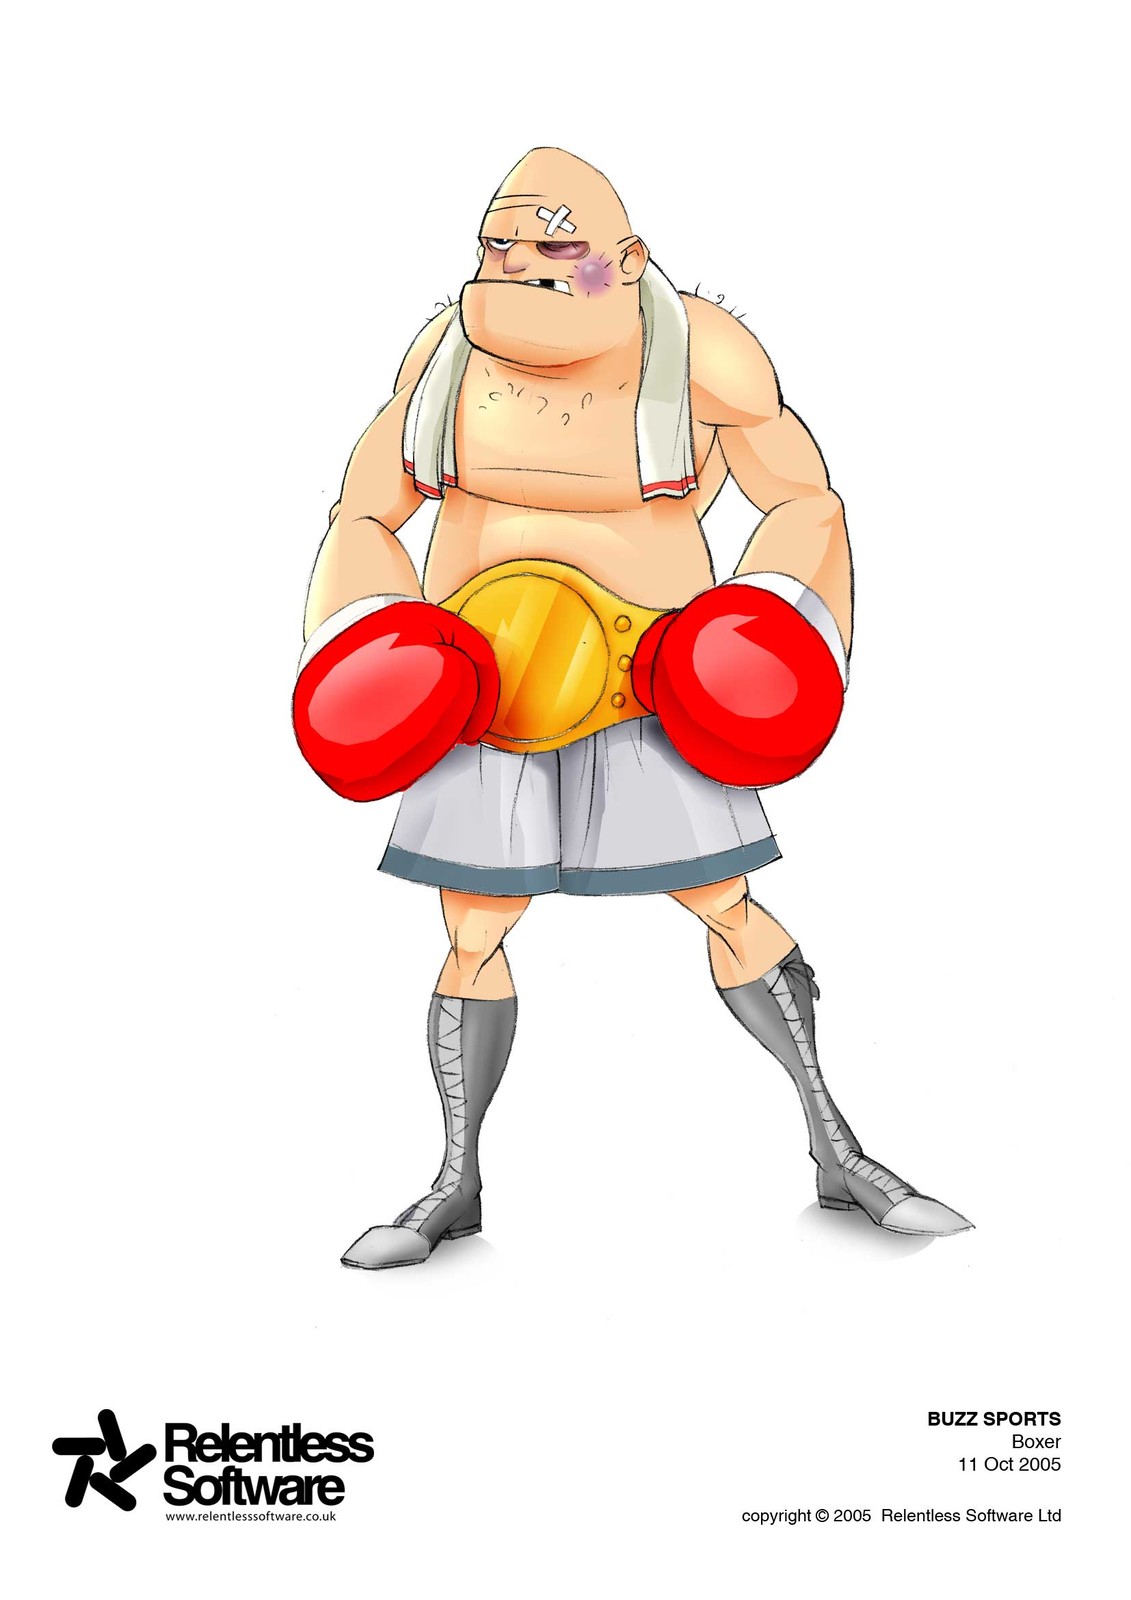 Boxer player concept for BUZZ Game.

